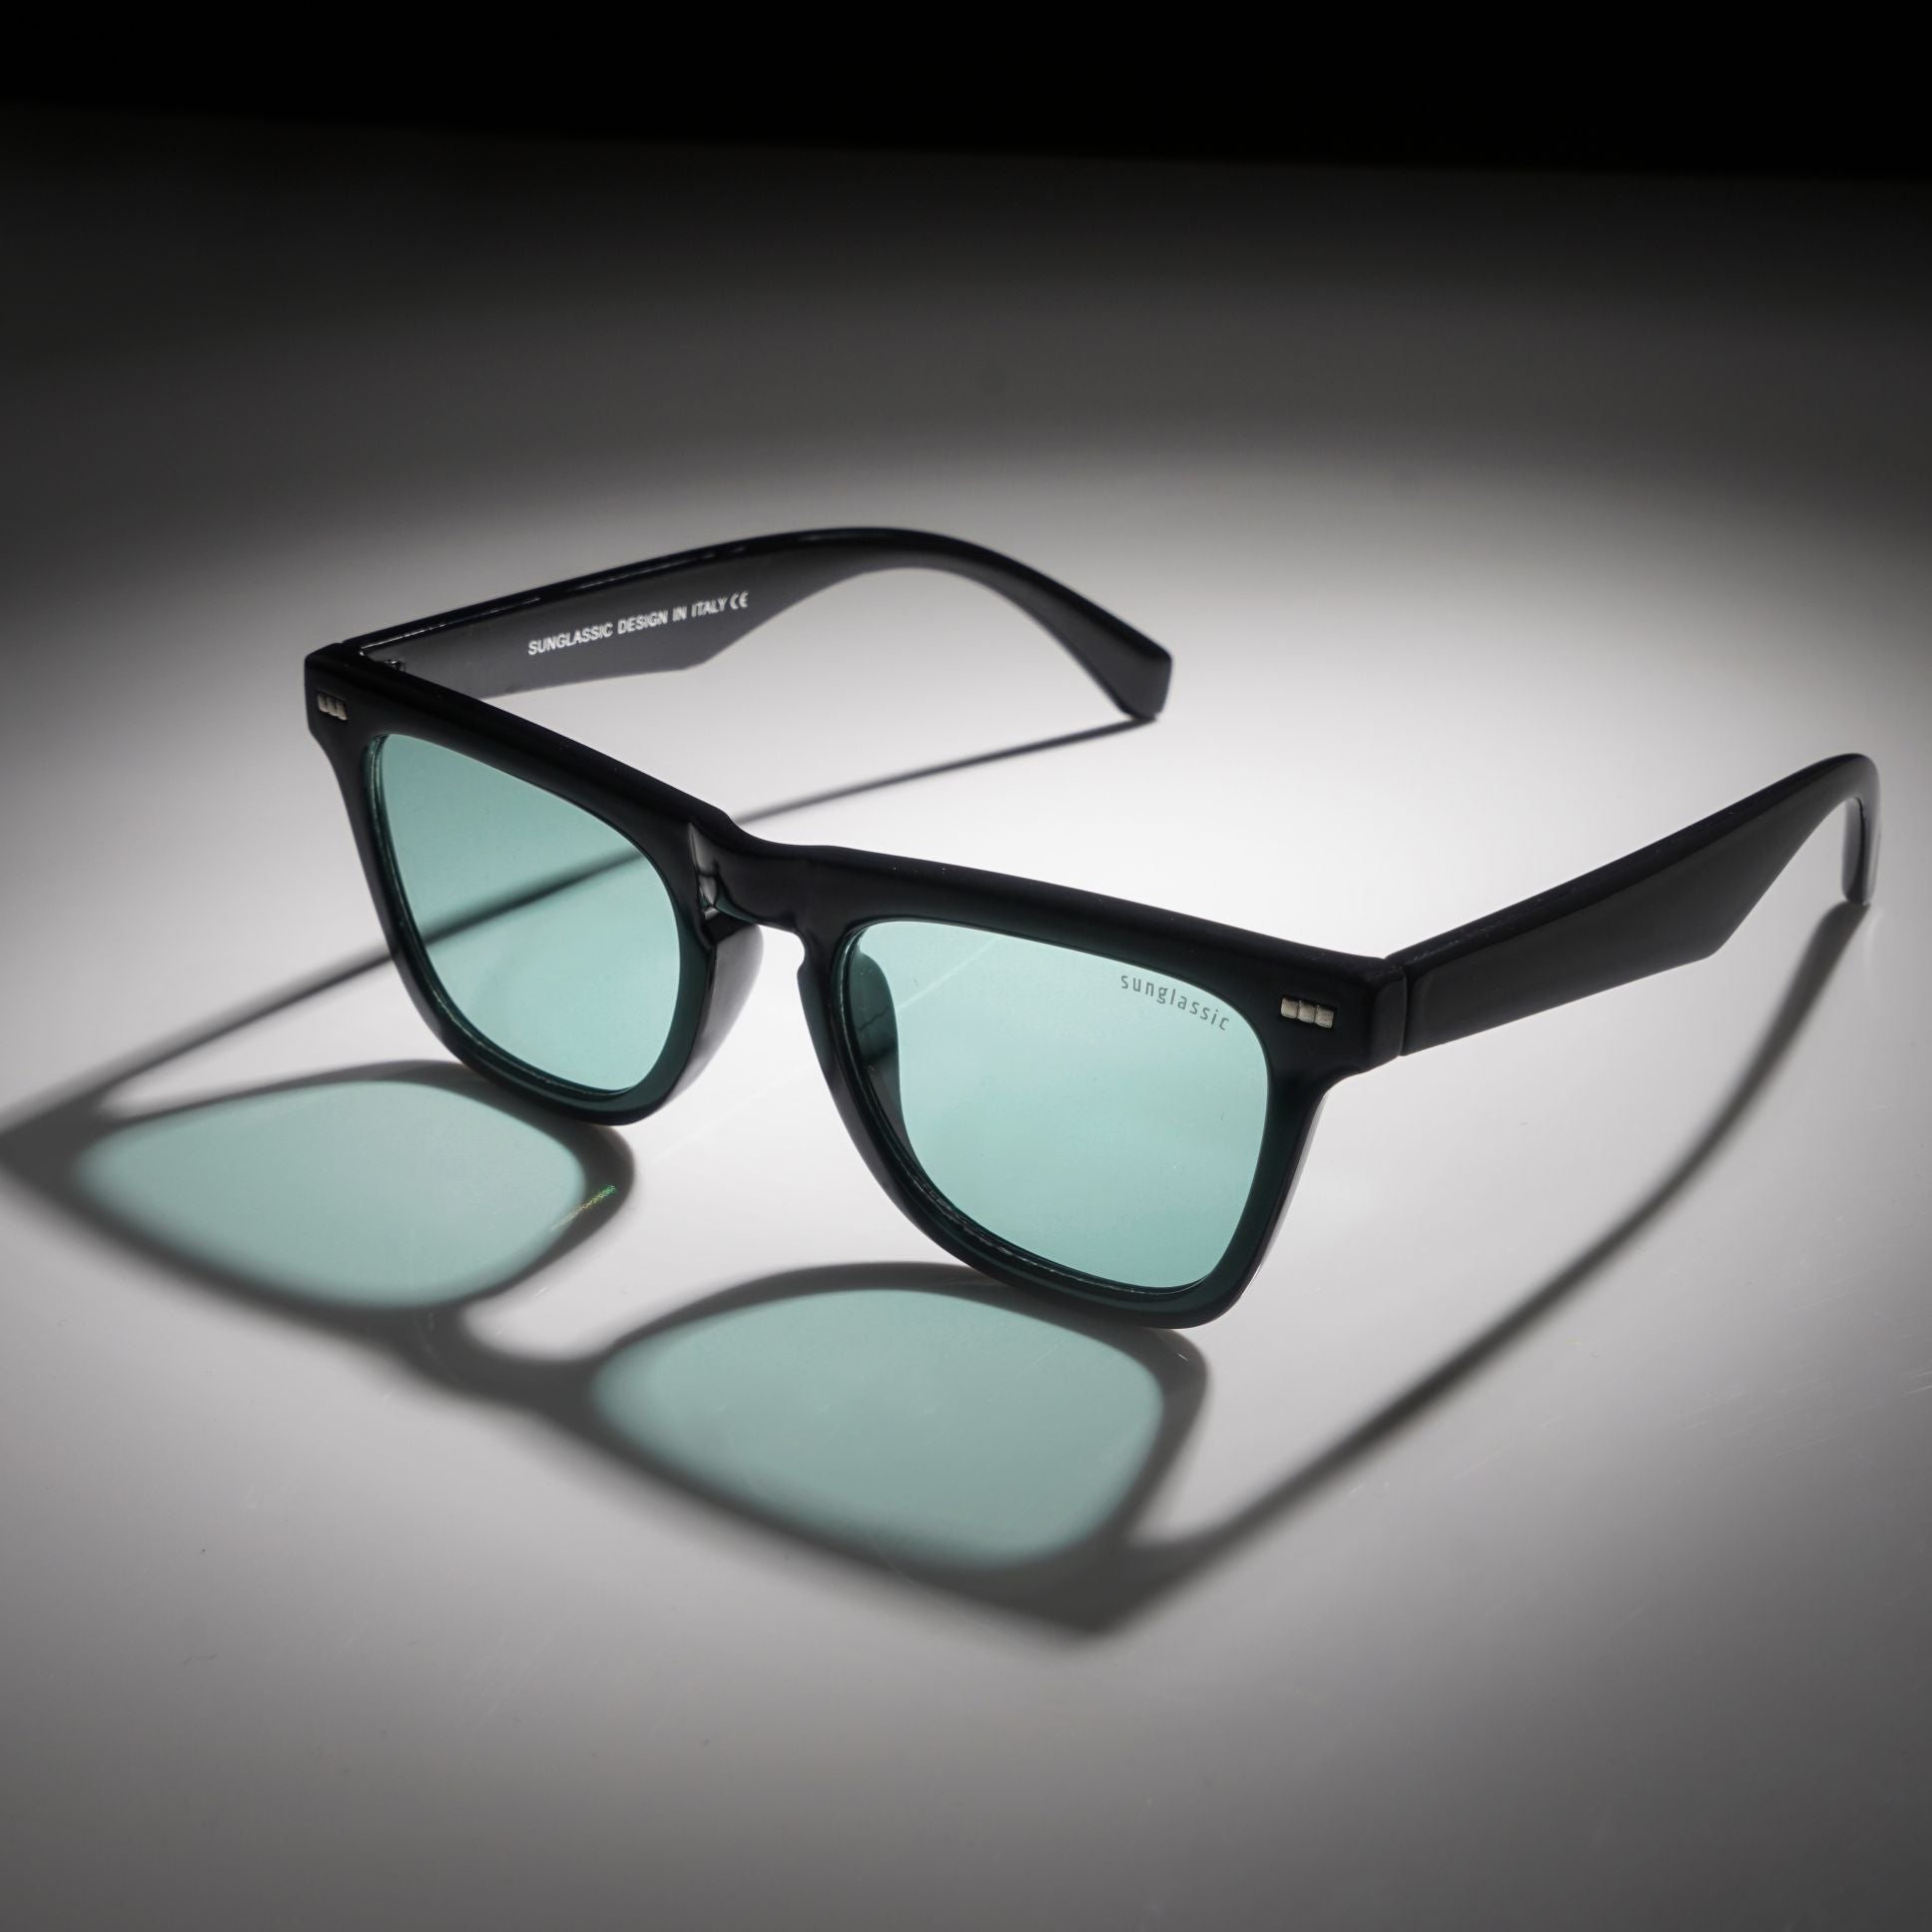 Peter Black Green Square Sunglasses